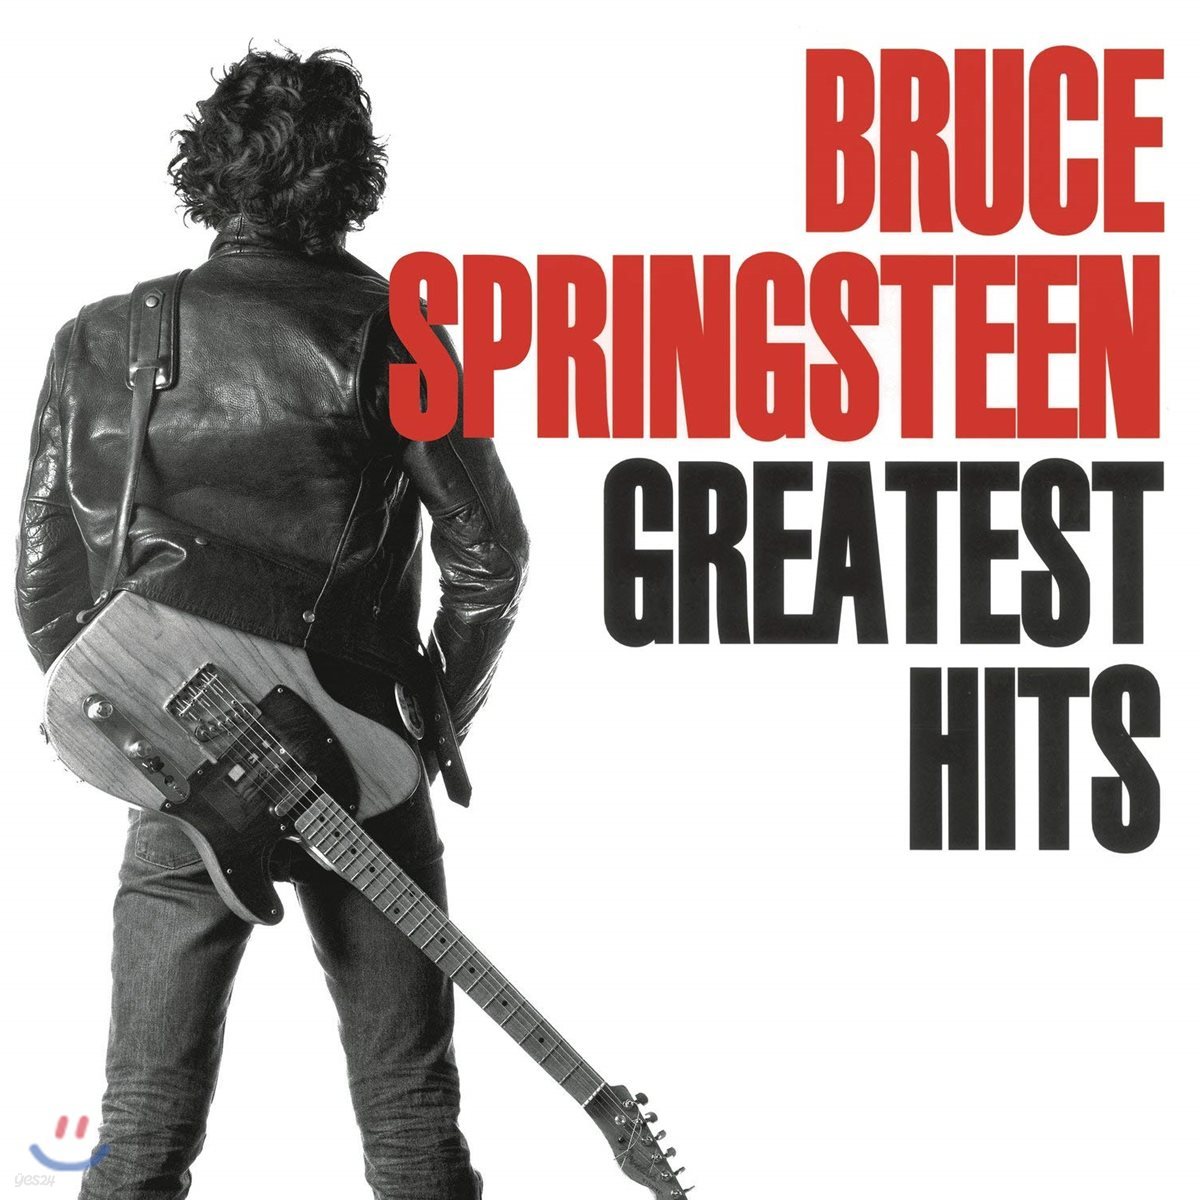 Bruce Springsteen - Greatest Hits 브루스 스프링스틴 베스트 [2LP]